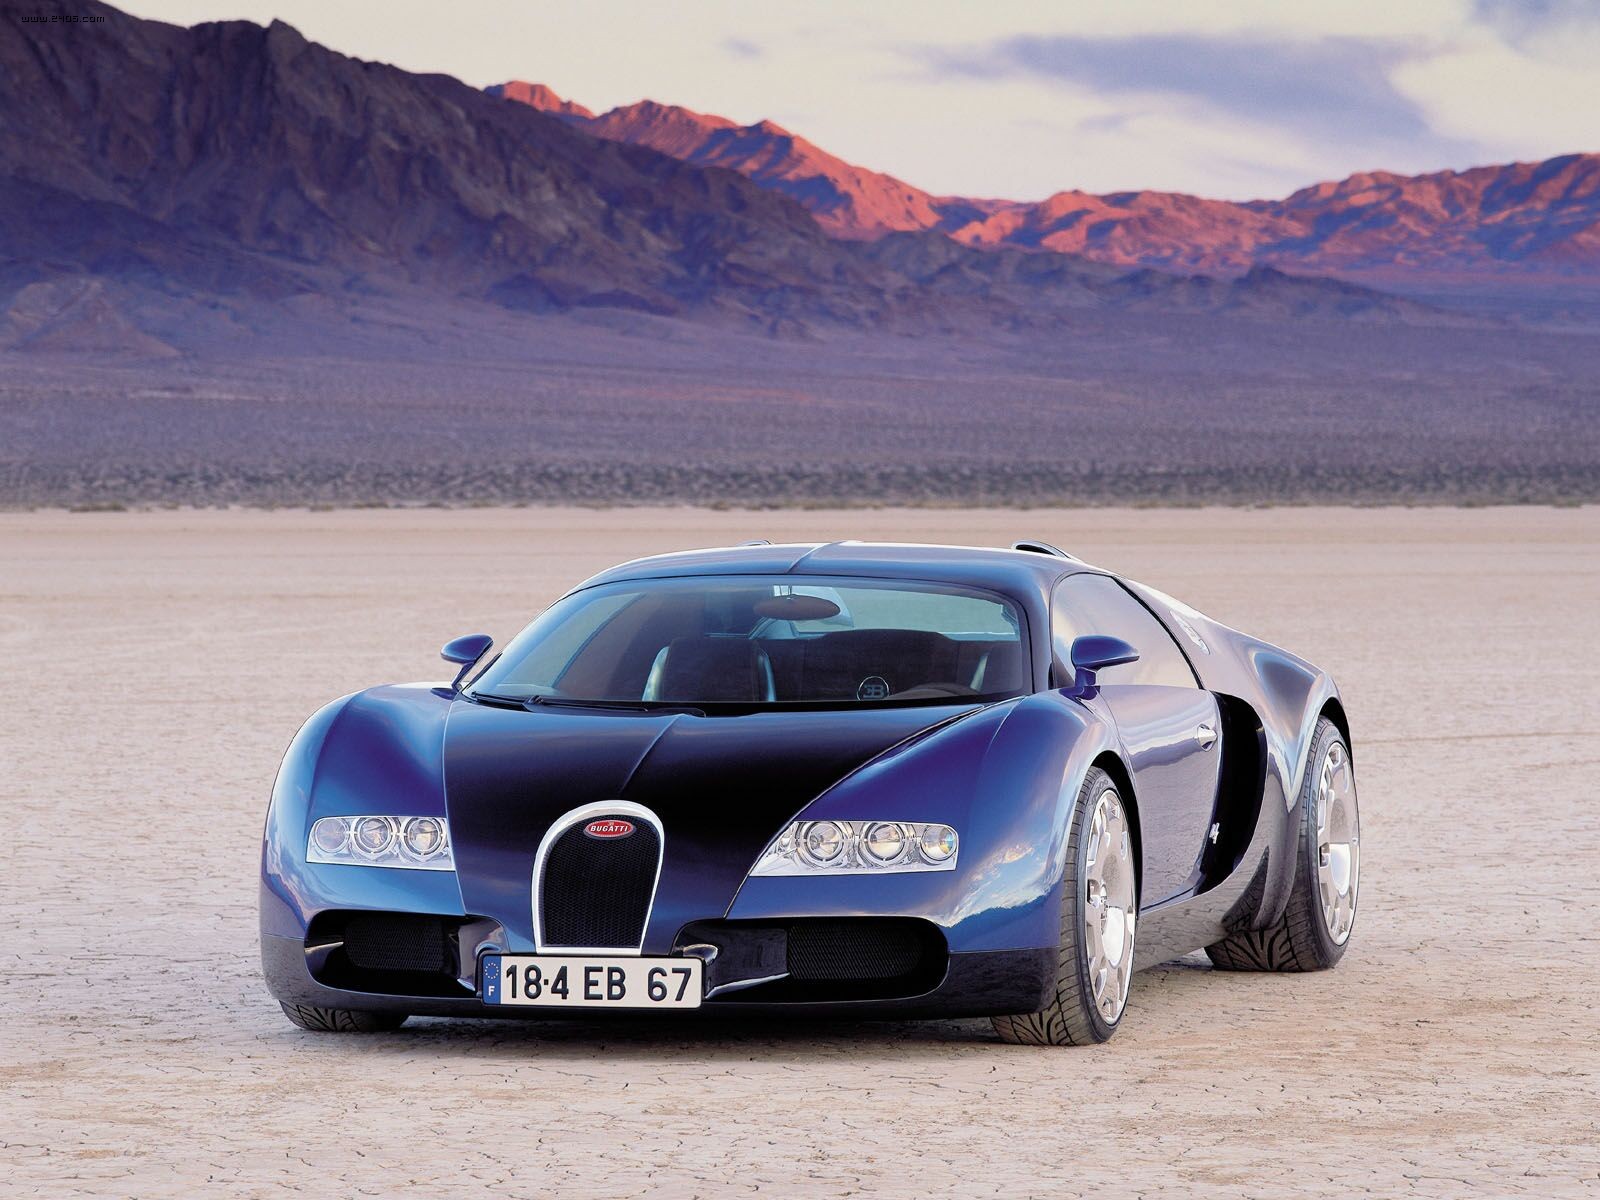 Bugatti+cars+images